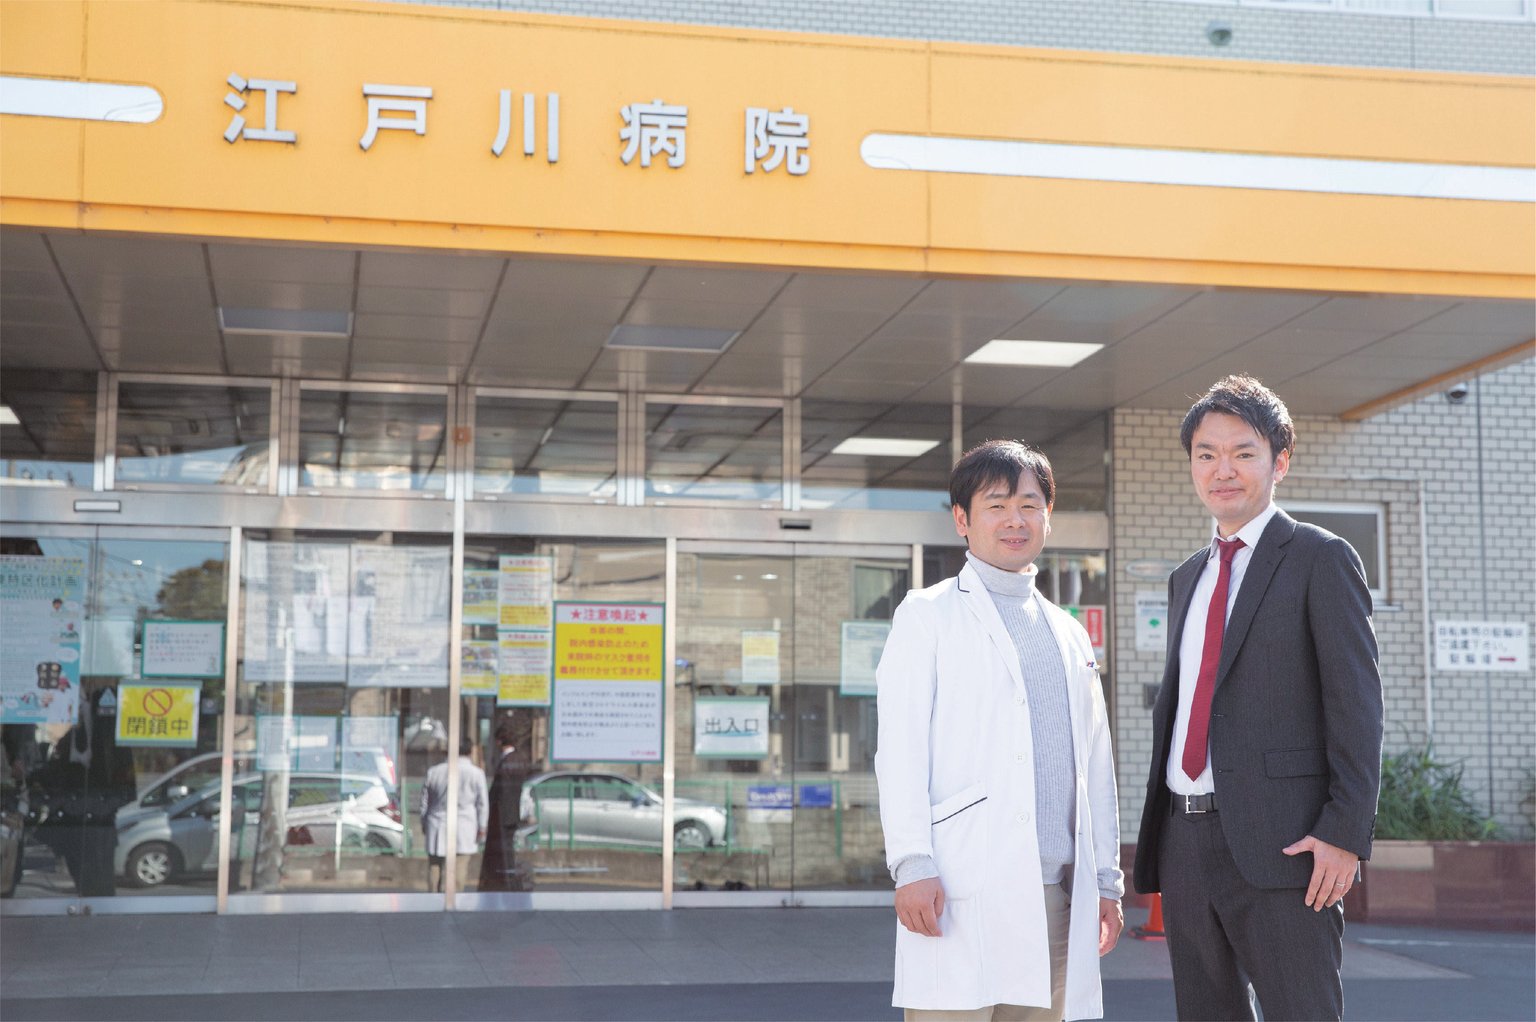 From left, Dr. Tomoyoshi Myo, Department Head of Tumor and Hematology, Edogawa Hospital, and Kenji Ota, Representative Director and President of CODE Meee